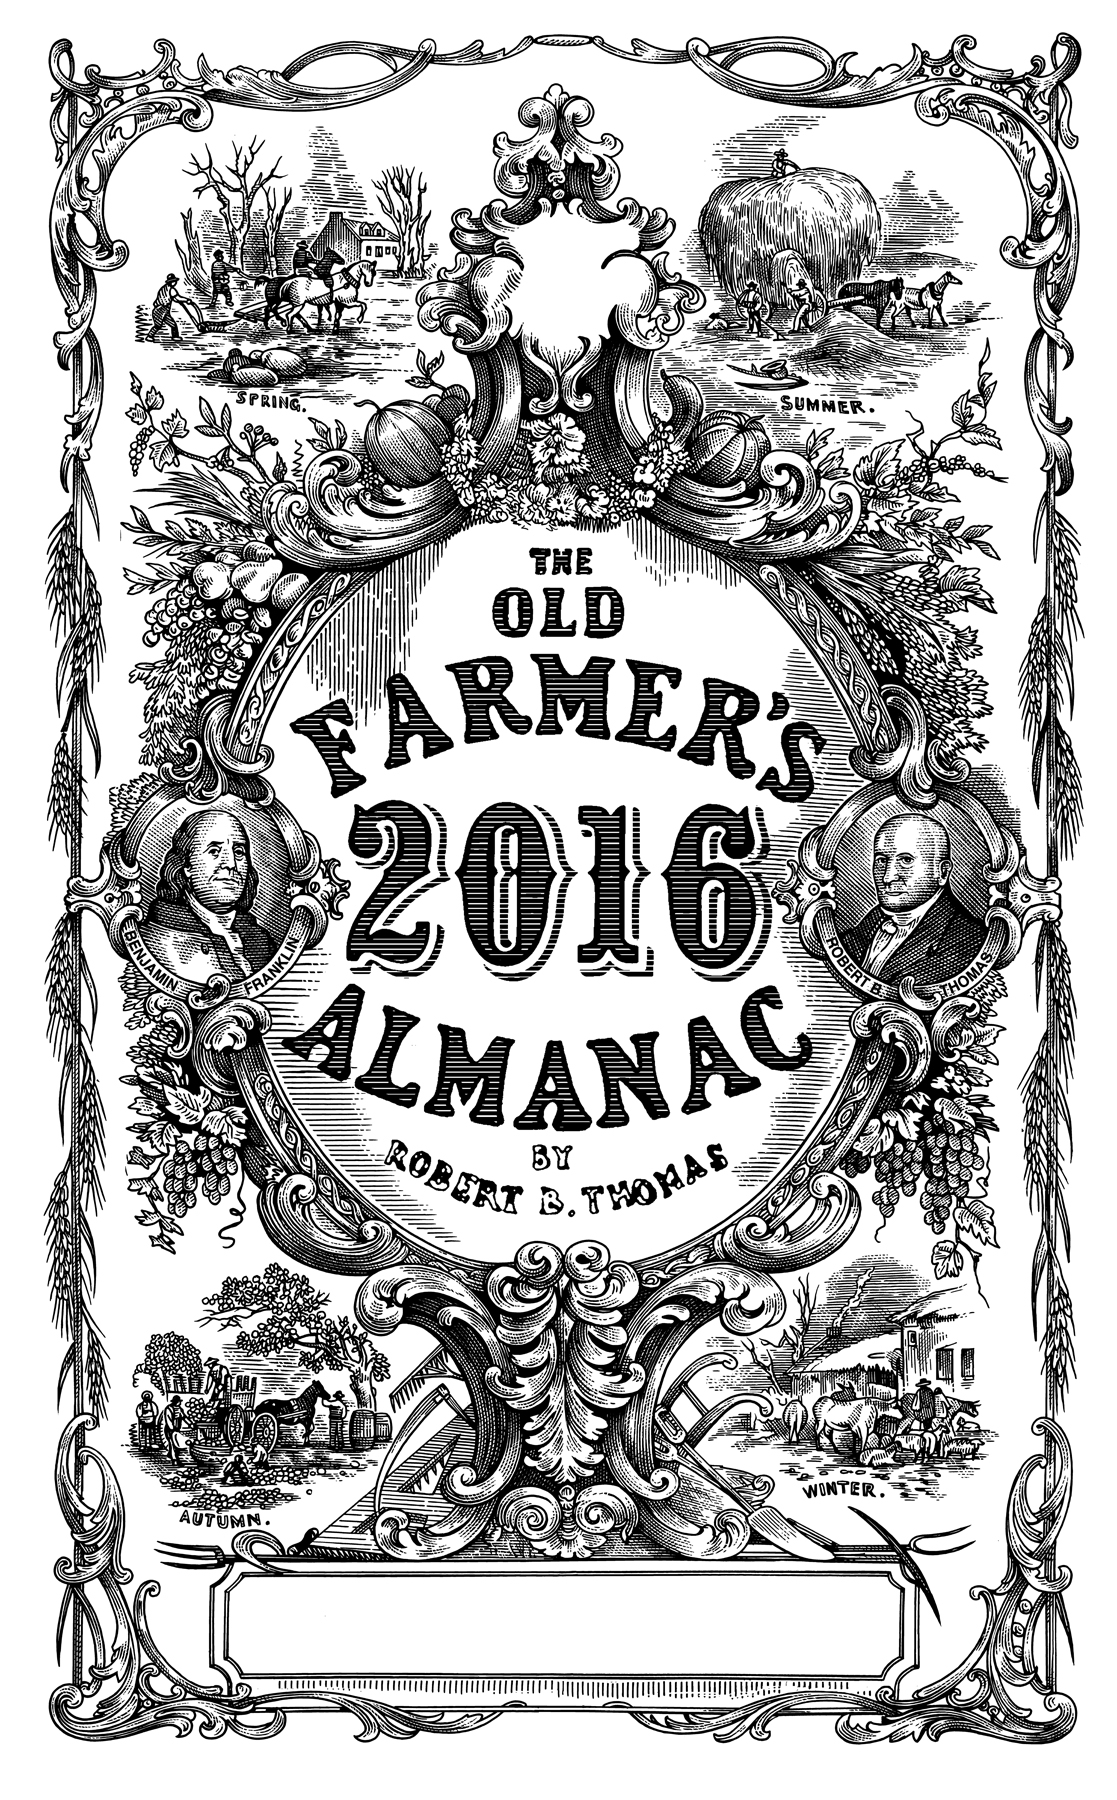 Farmers Almanac